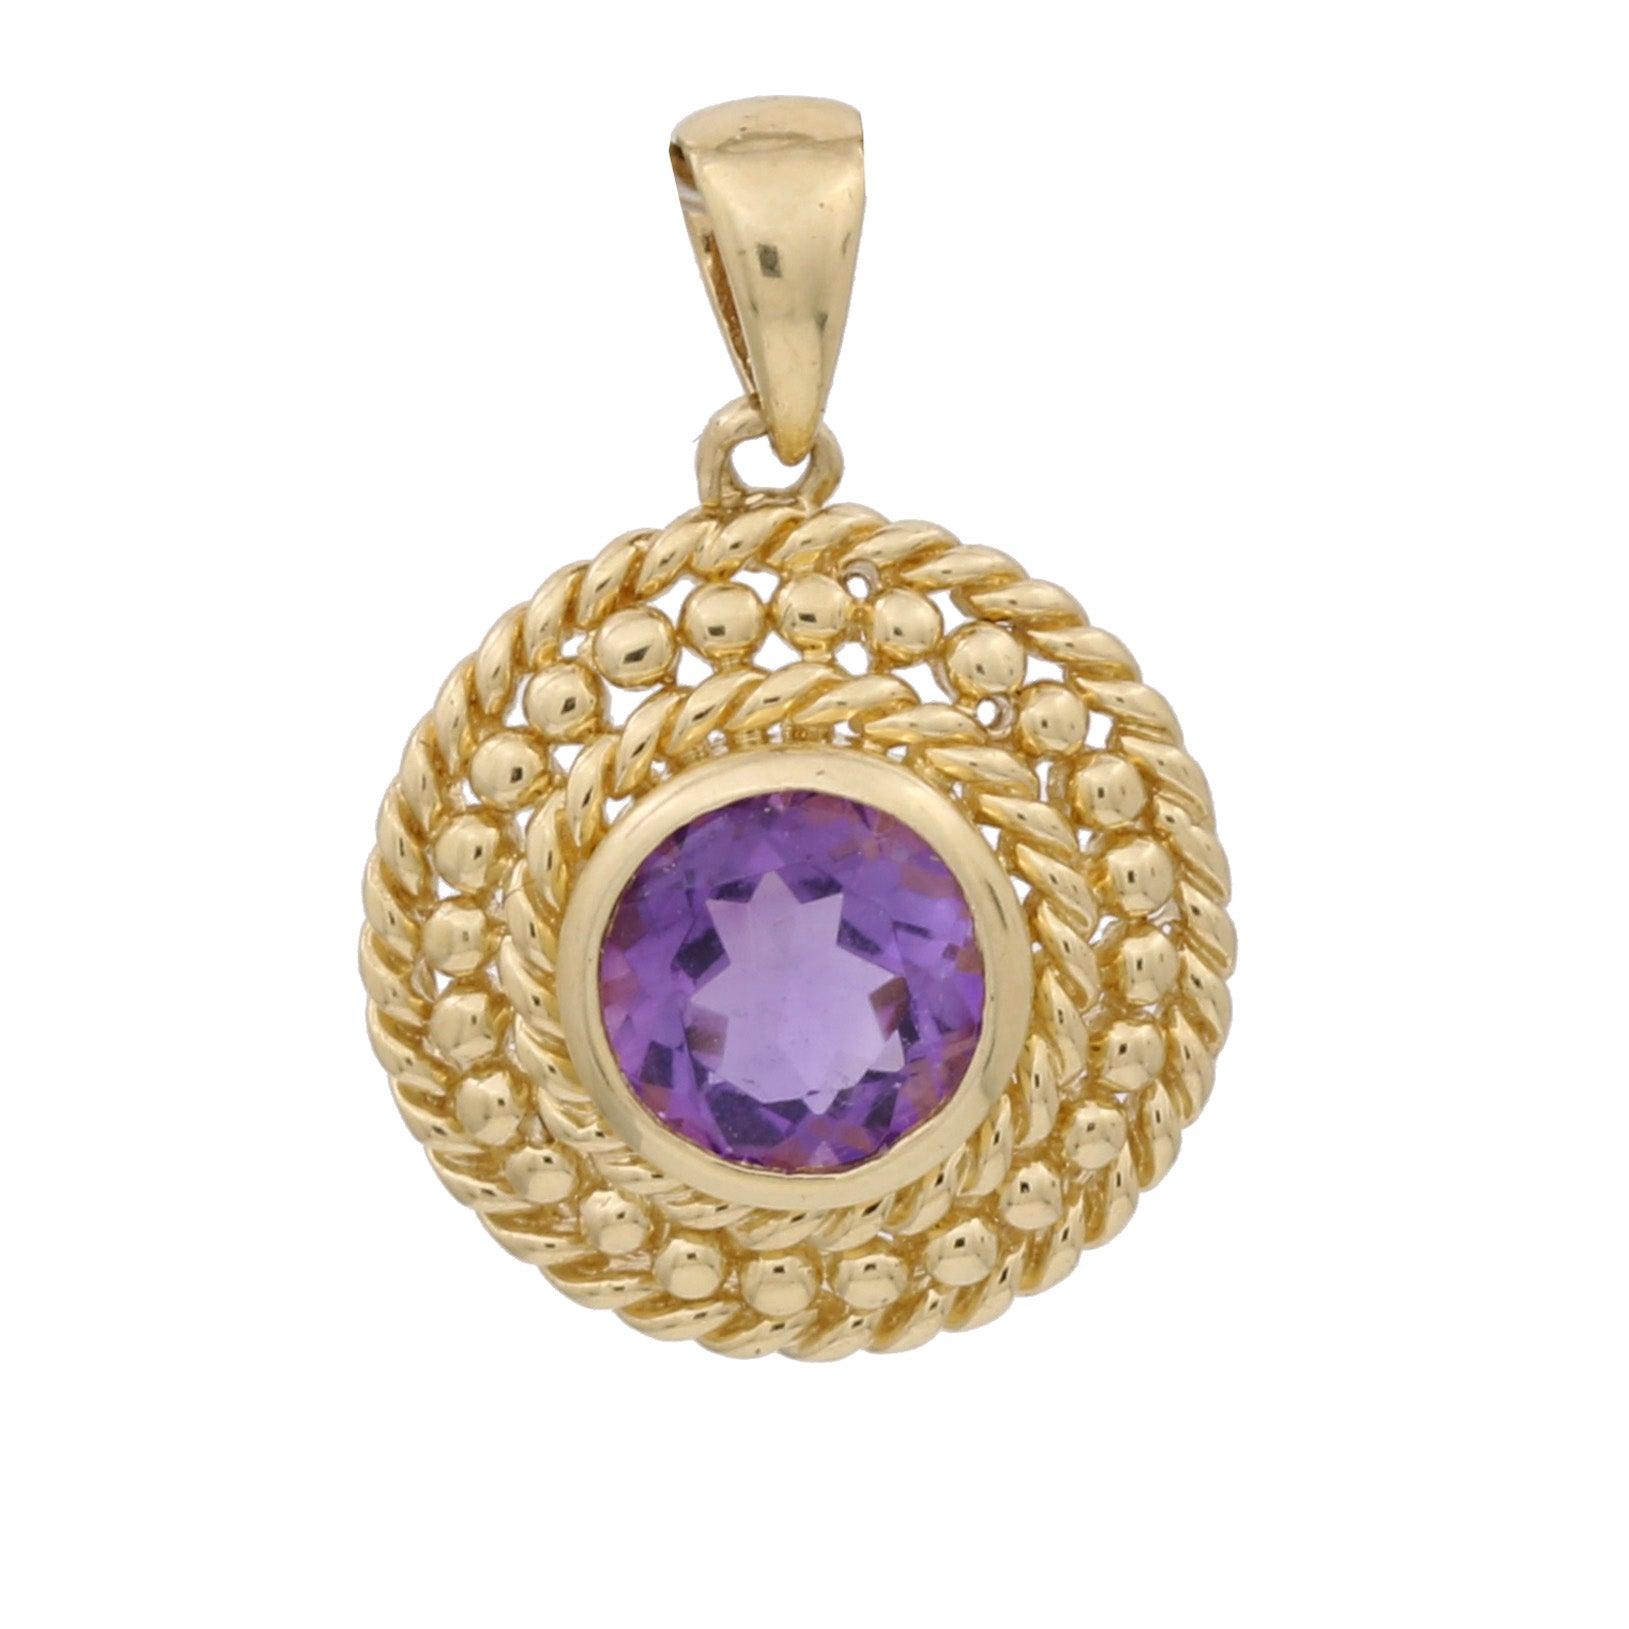 Women's Amethyst Gemstone Pendant in 14k Yellow Gold Small Round Charm - 31 Jewels Inc.